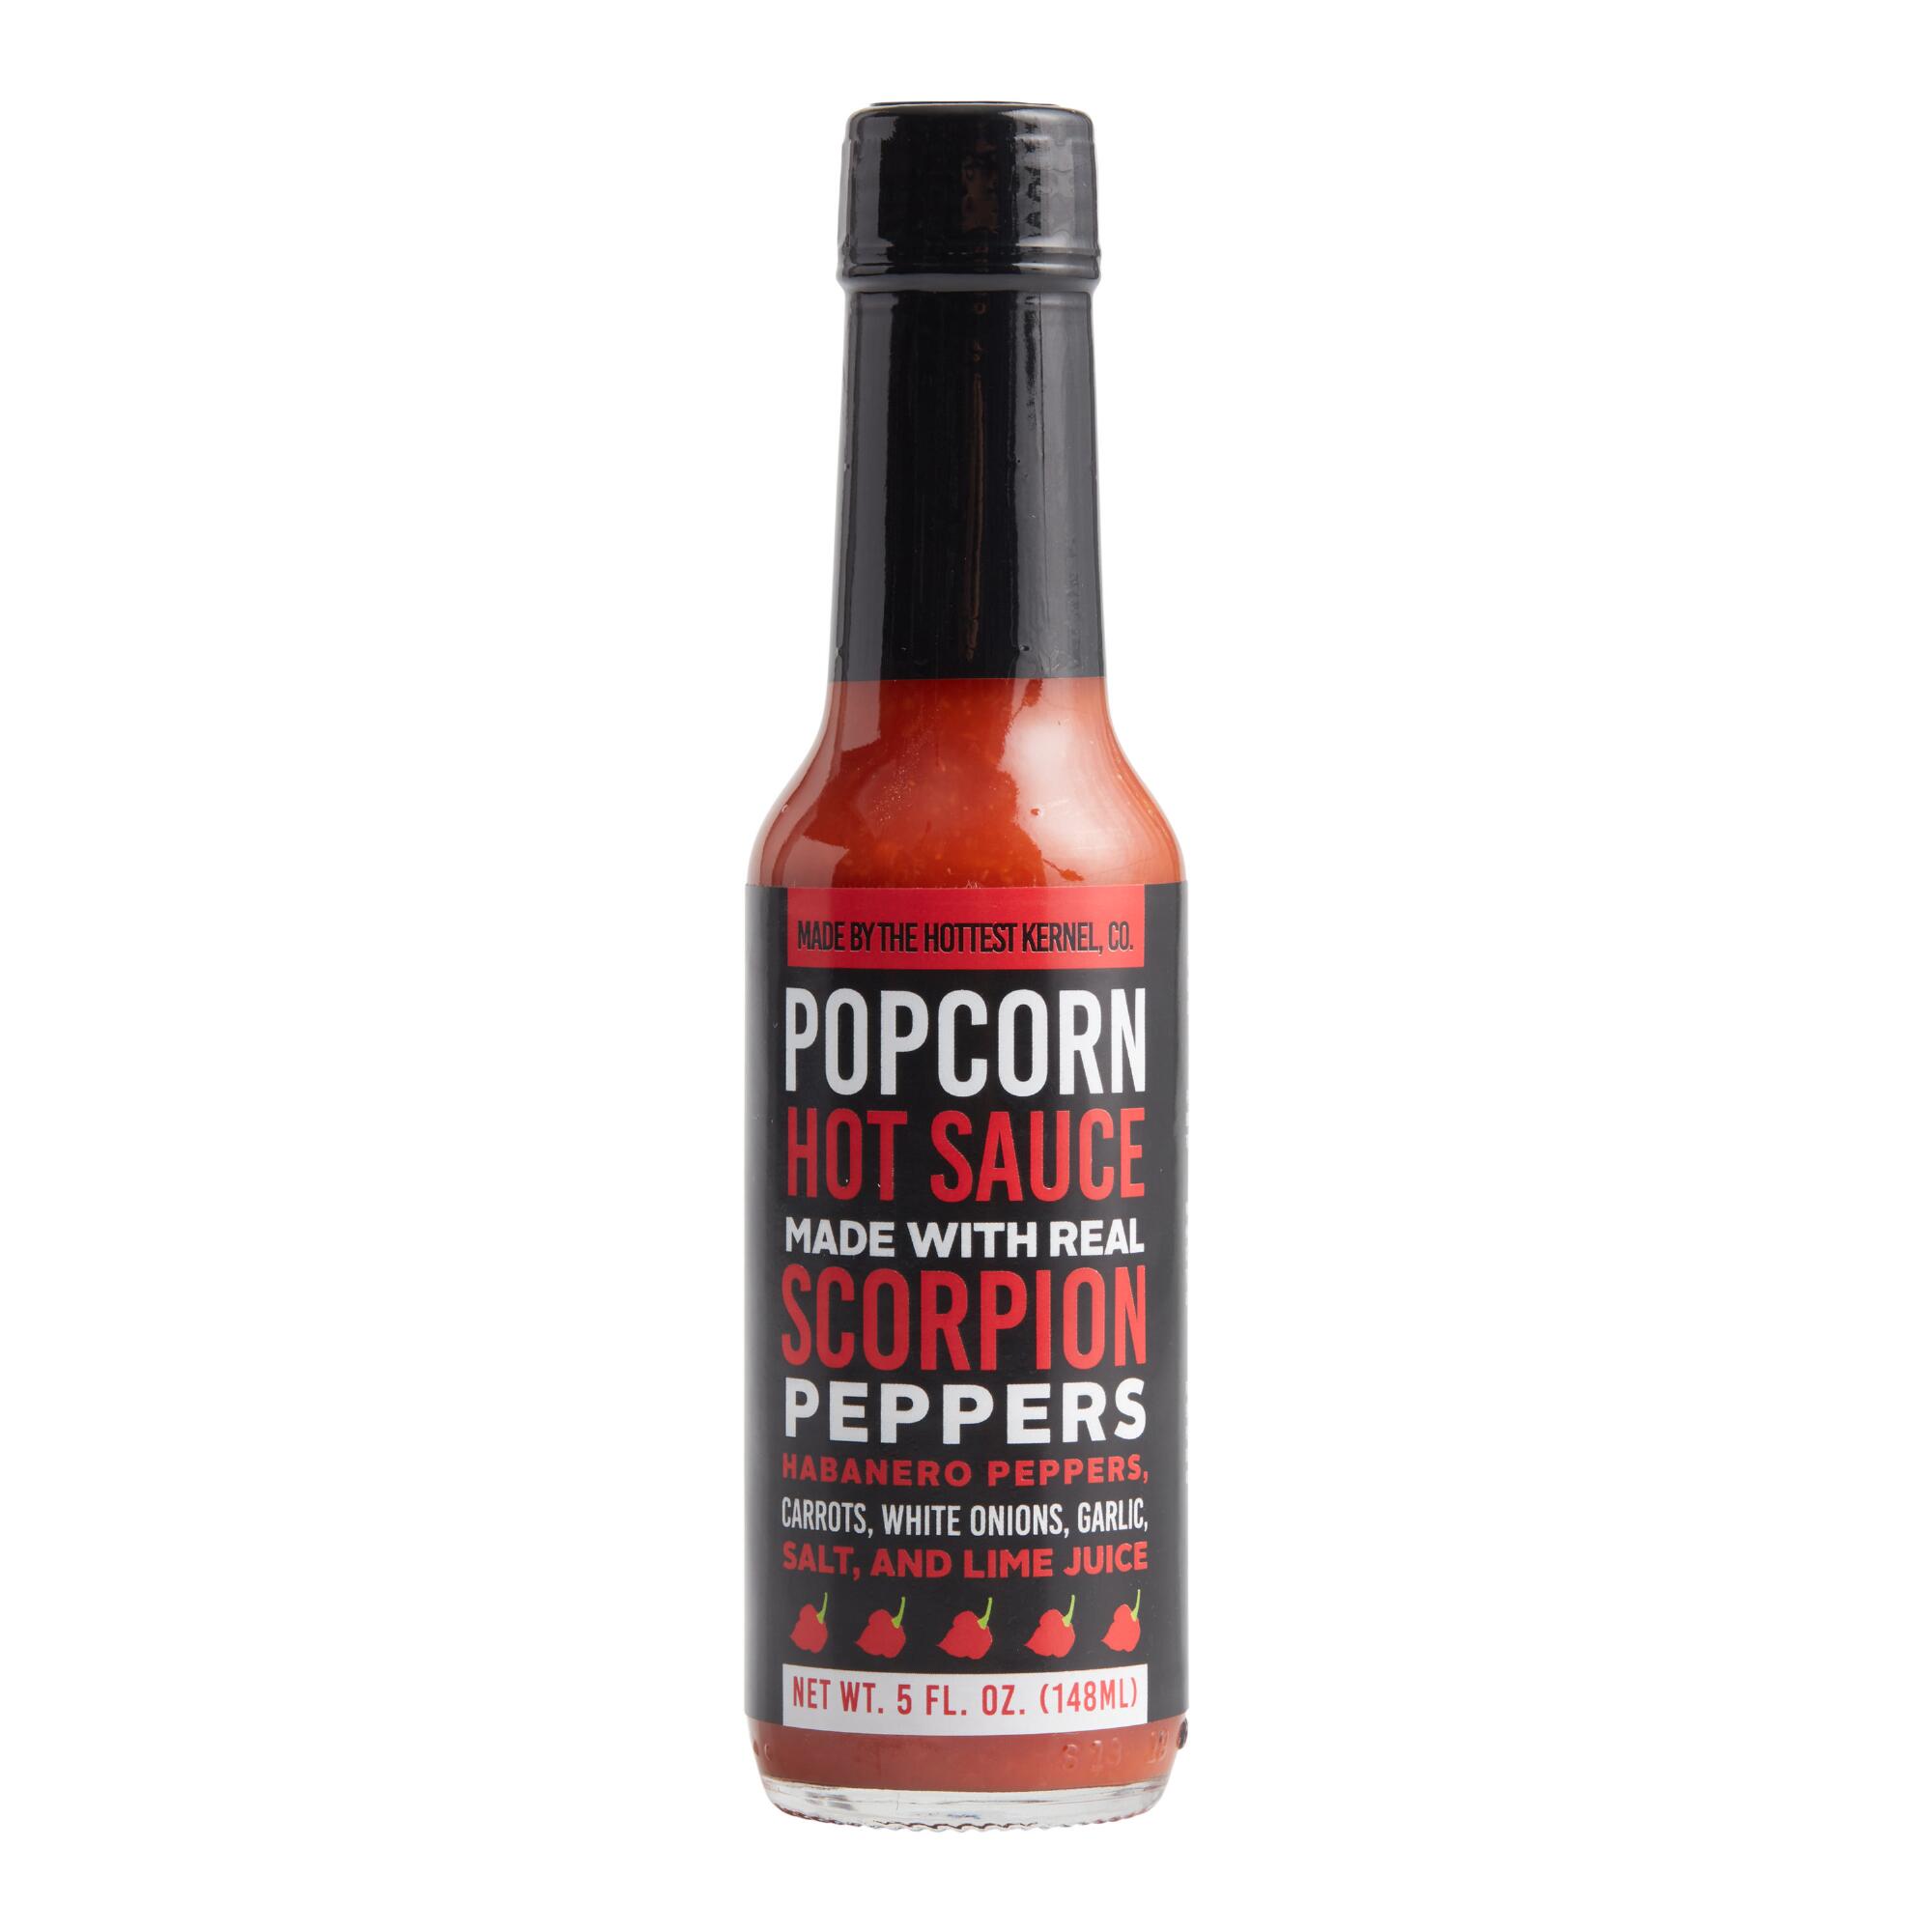 Melinda's Scorpion Pepper Popcorn Hot Sauce by World Market